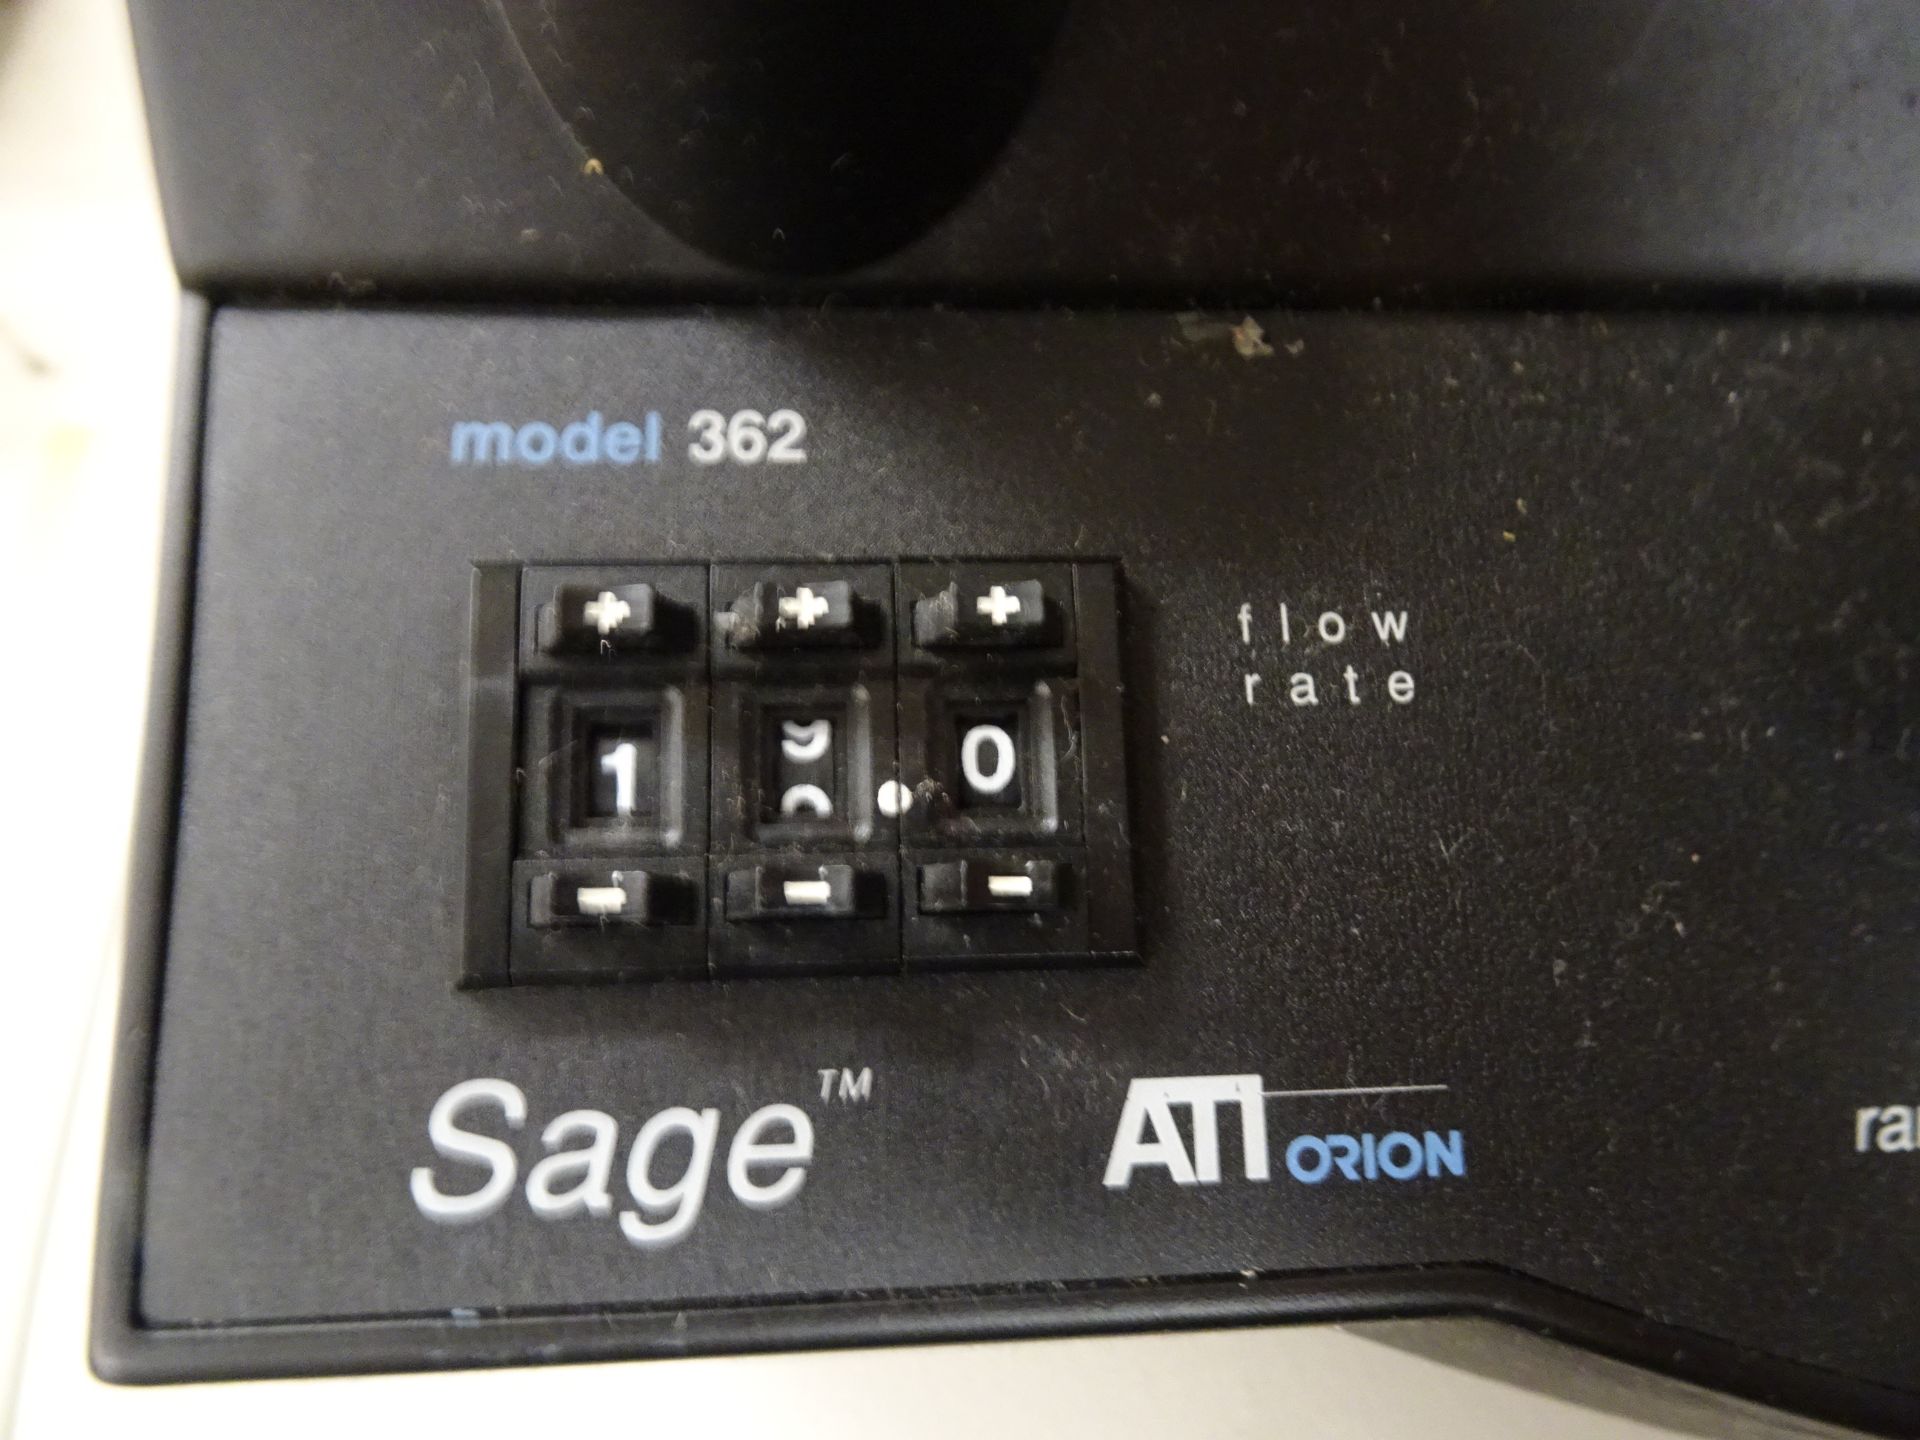 Sage Instruments ATI Orion Model 362 Syringe Infusion Pump - Image 5 of 5